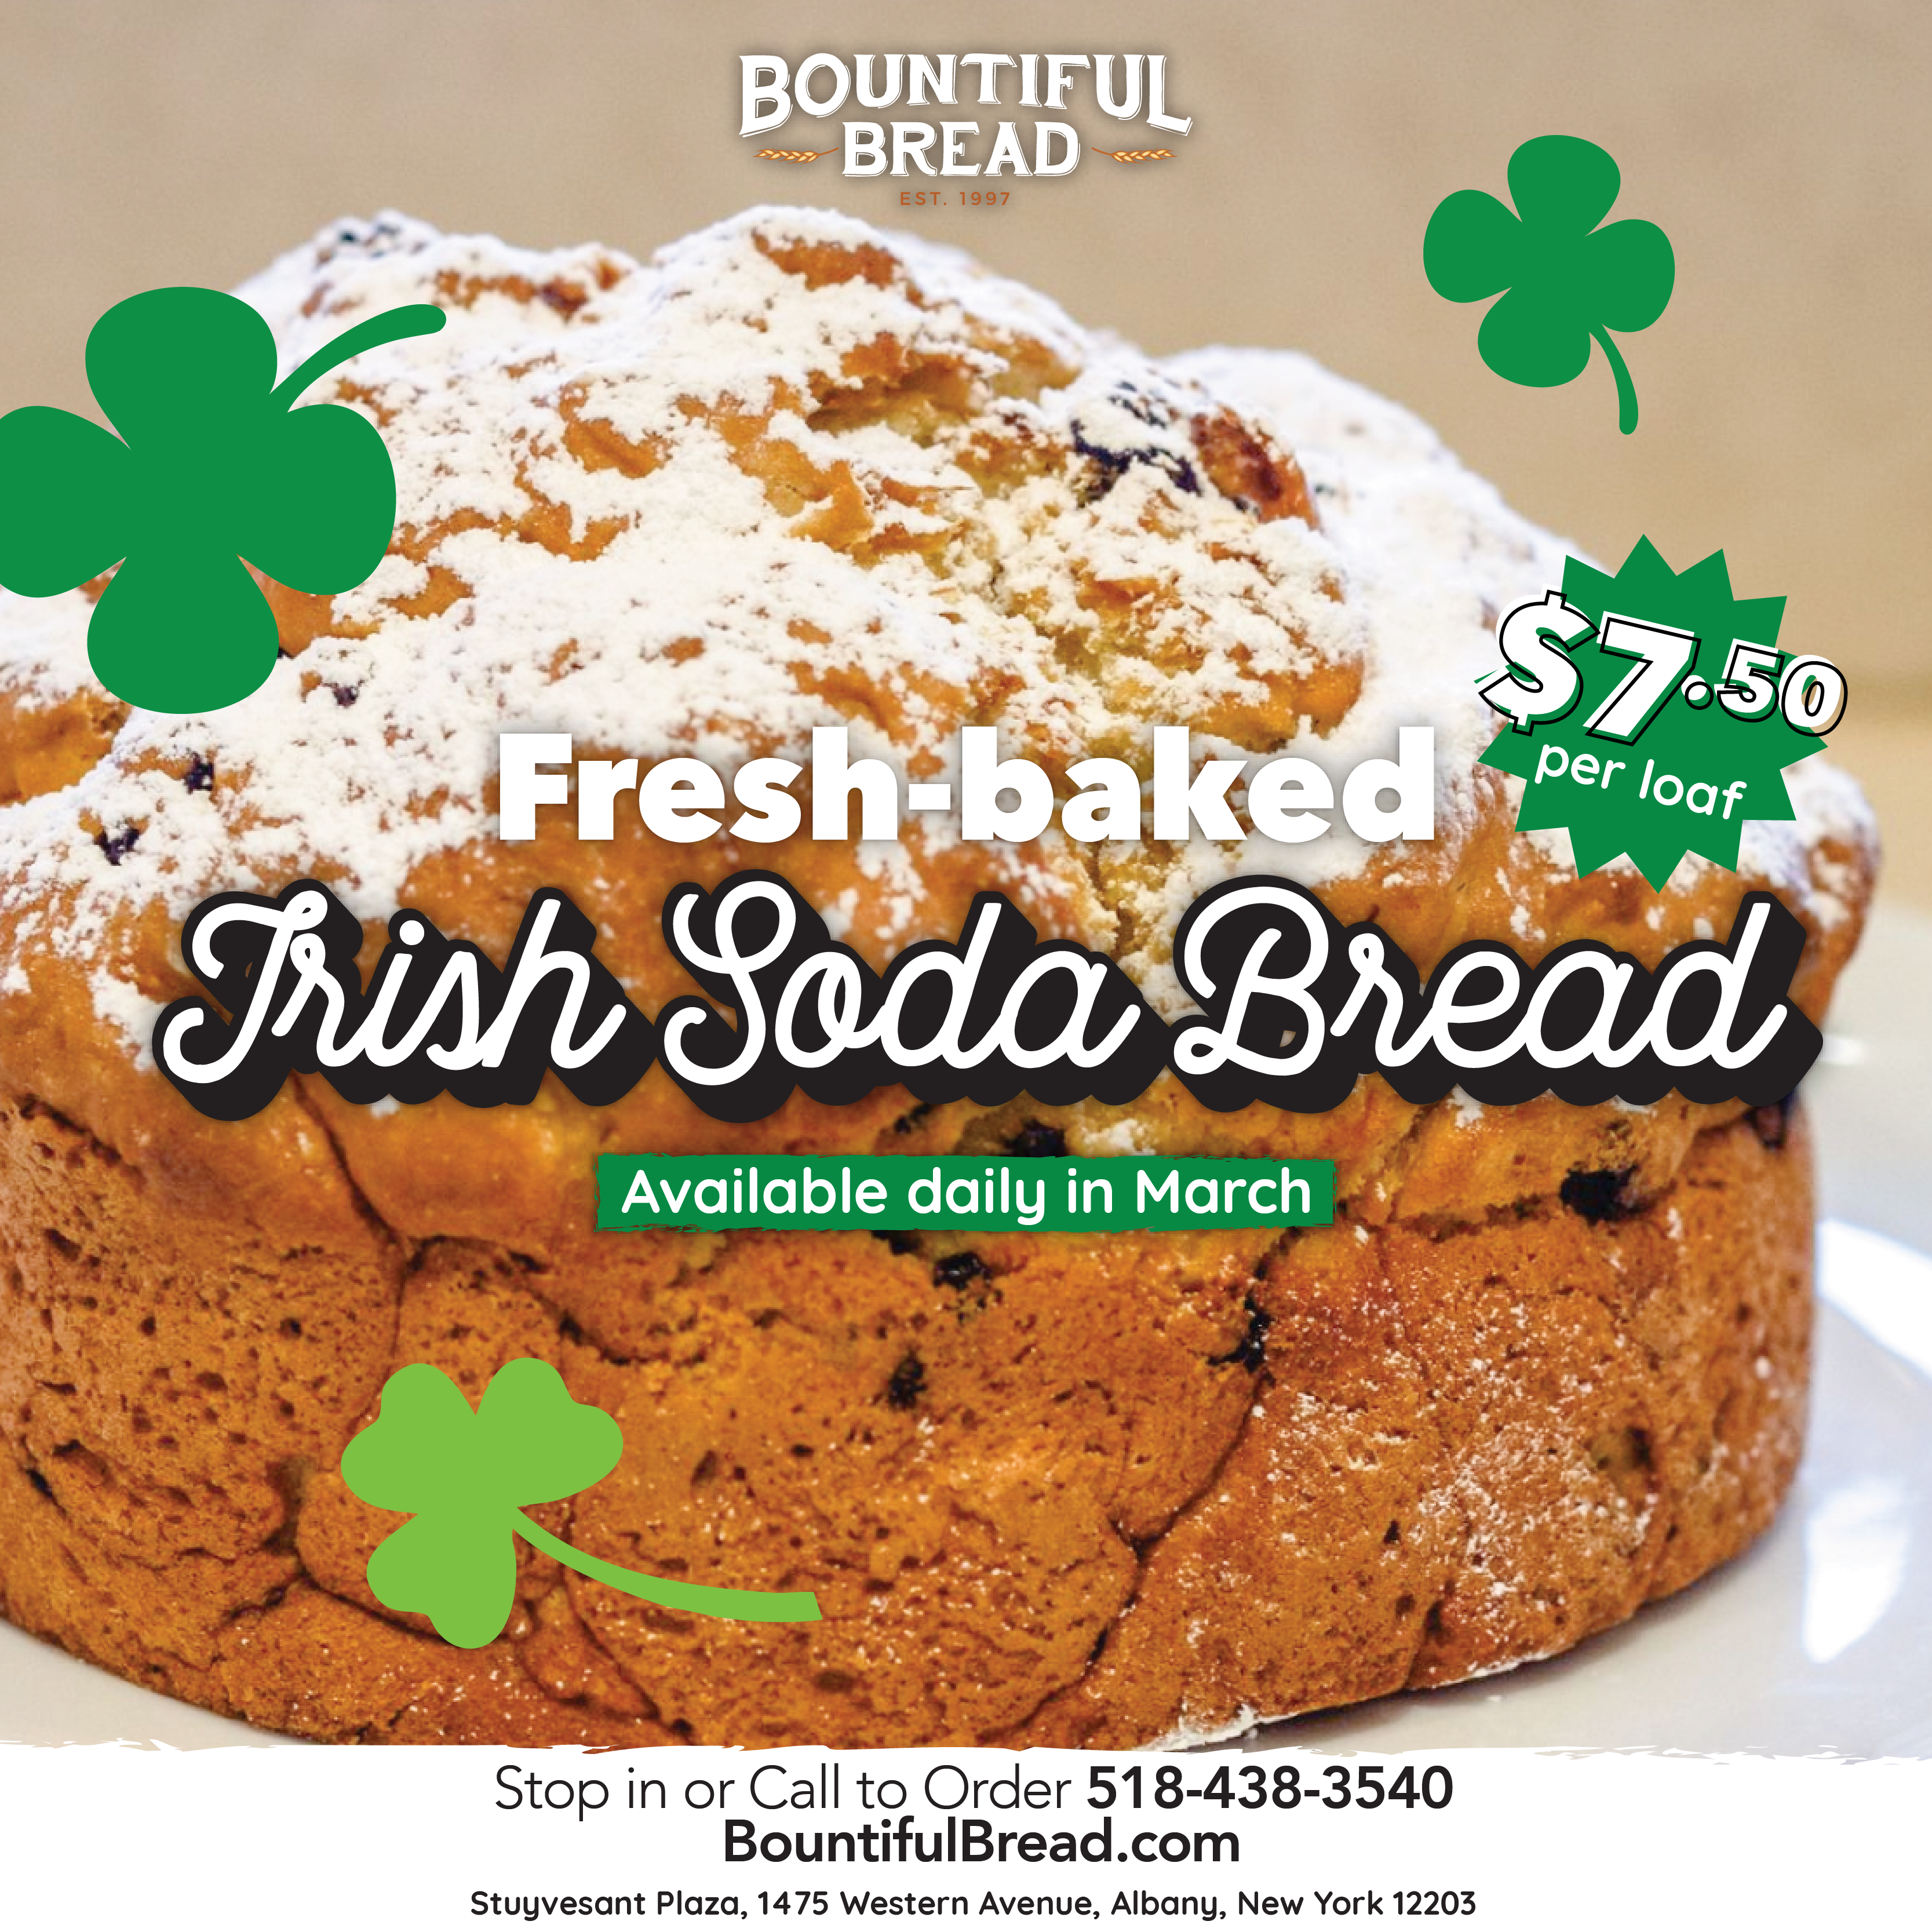 Irish Soda Bread Daily through March at Bountiful Bread